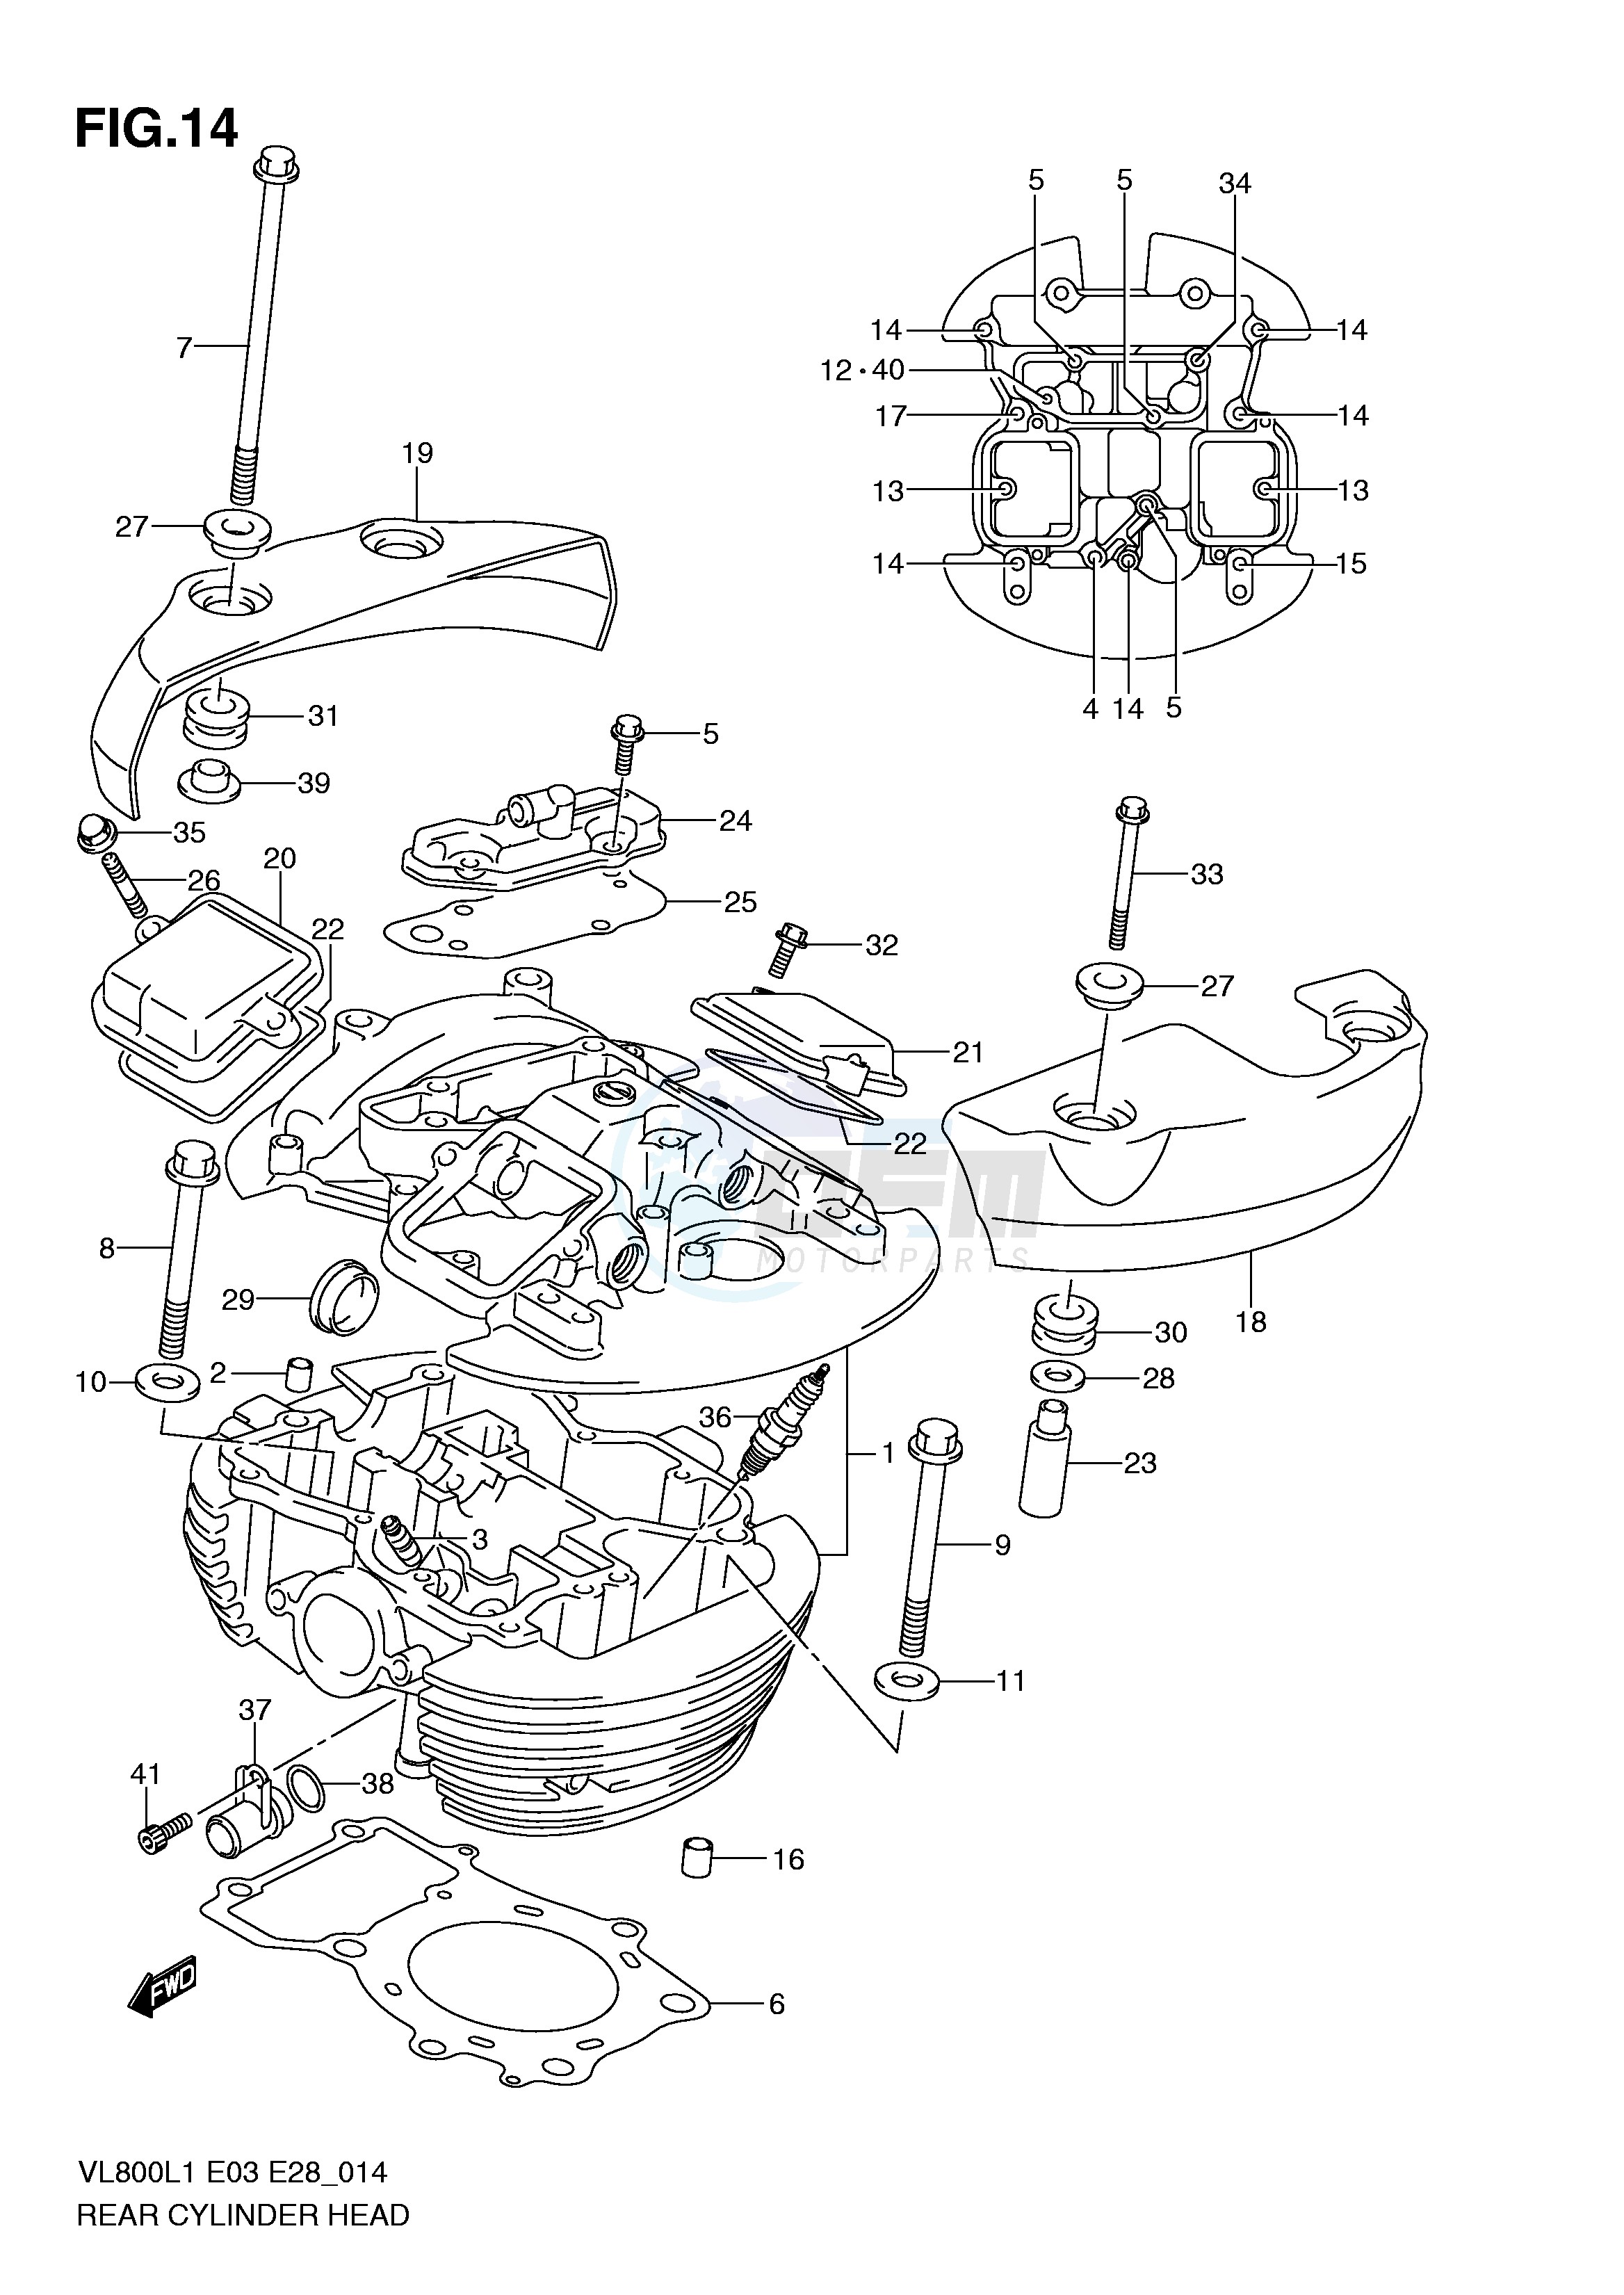 REAR CYLINDER HEAD (VL800CL1 E3) blueprint